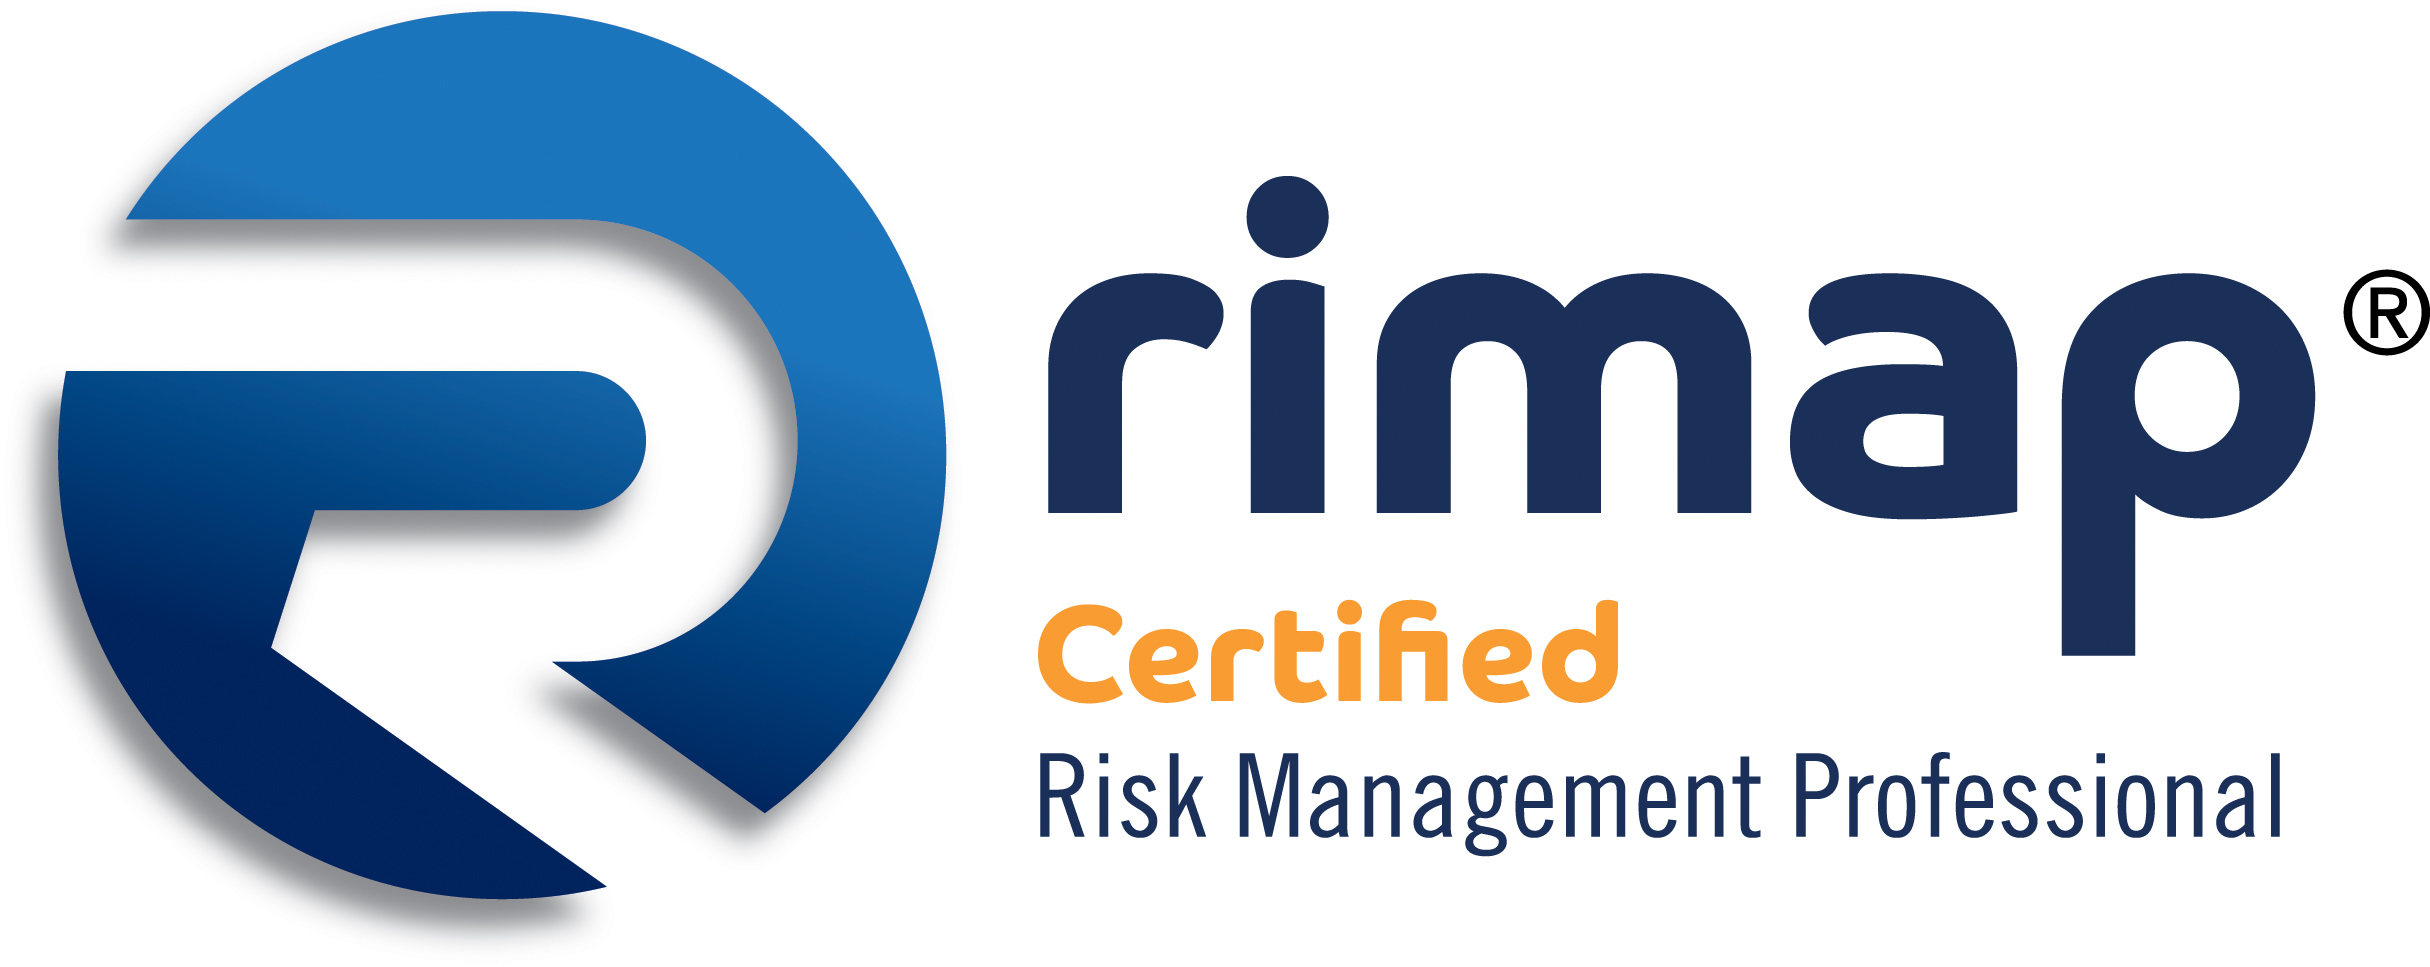 Certificazione RIMAP